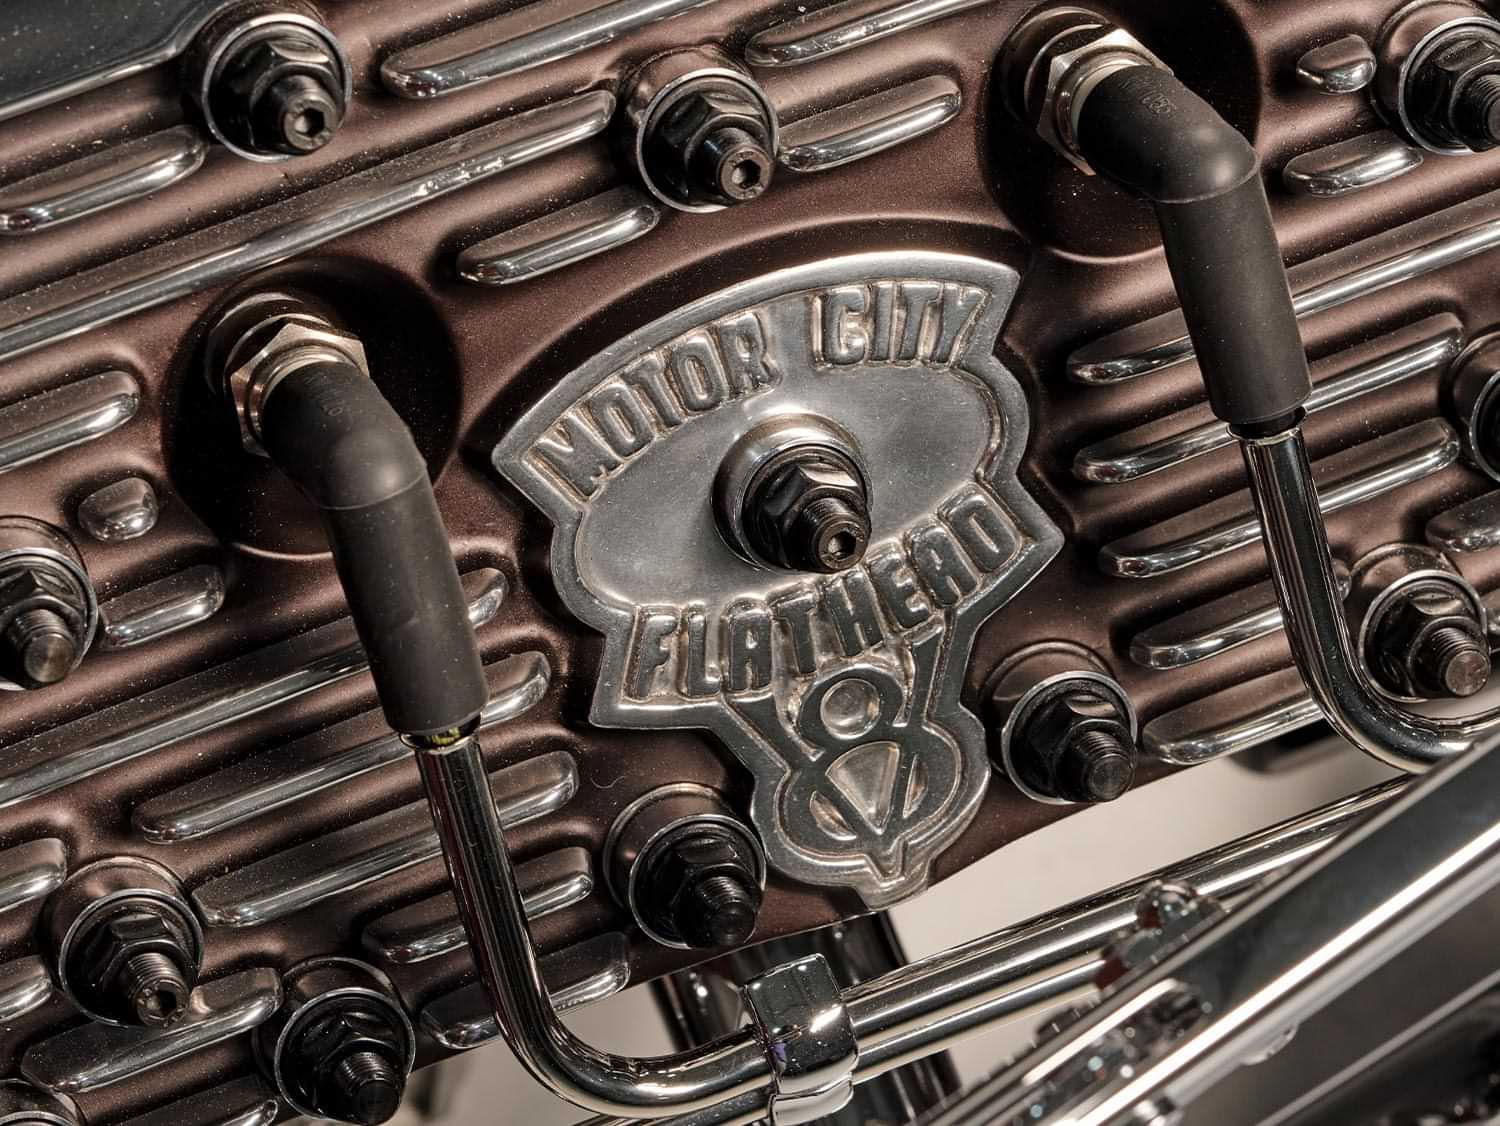 close view of the Motor City Flathead emblem an engine cylinder head